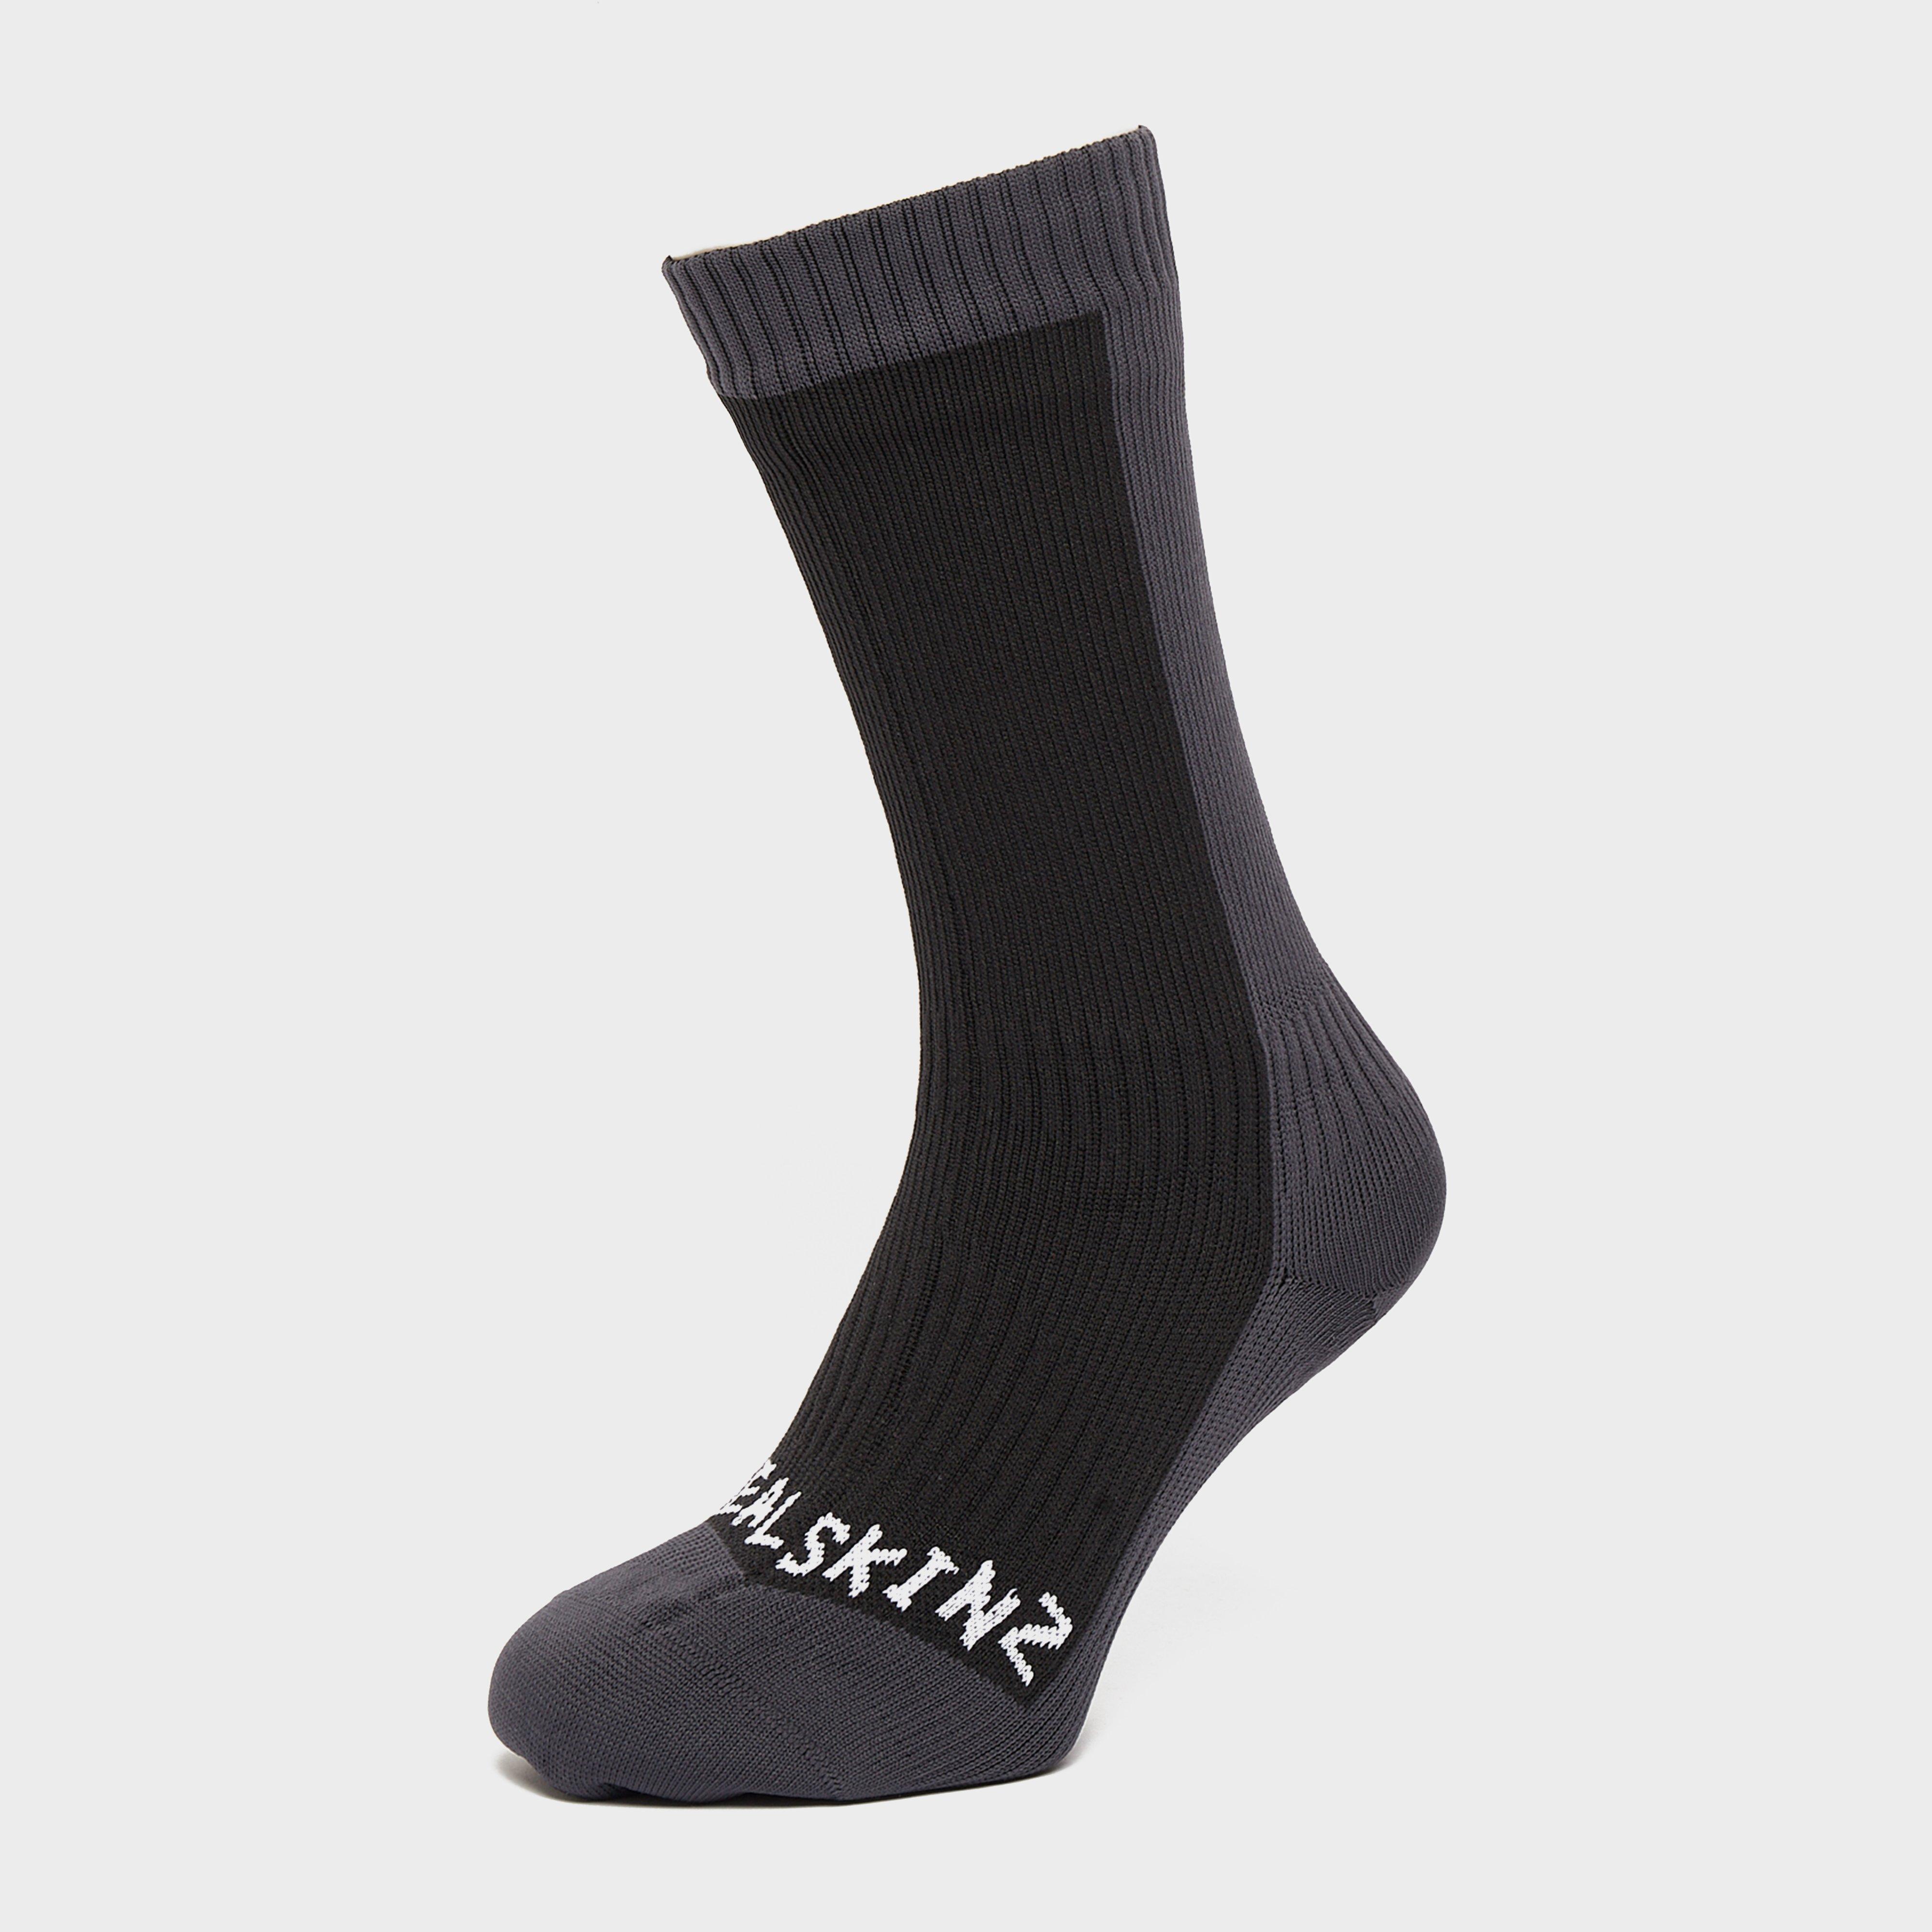 SealSkinz Sealskinz Waterproof Cold Weather Mid Length Sock - Black, Black